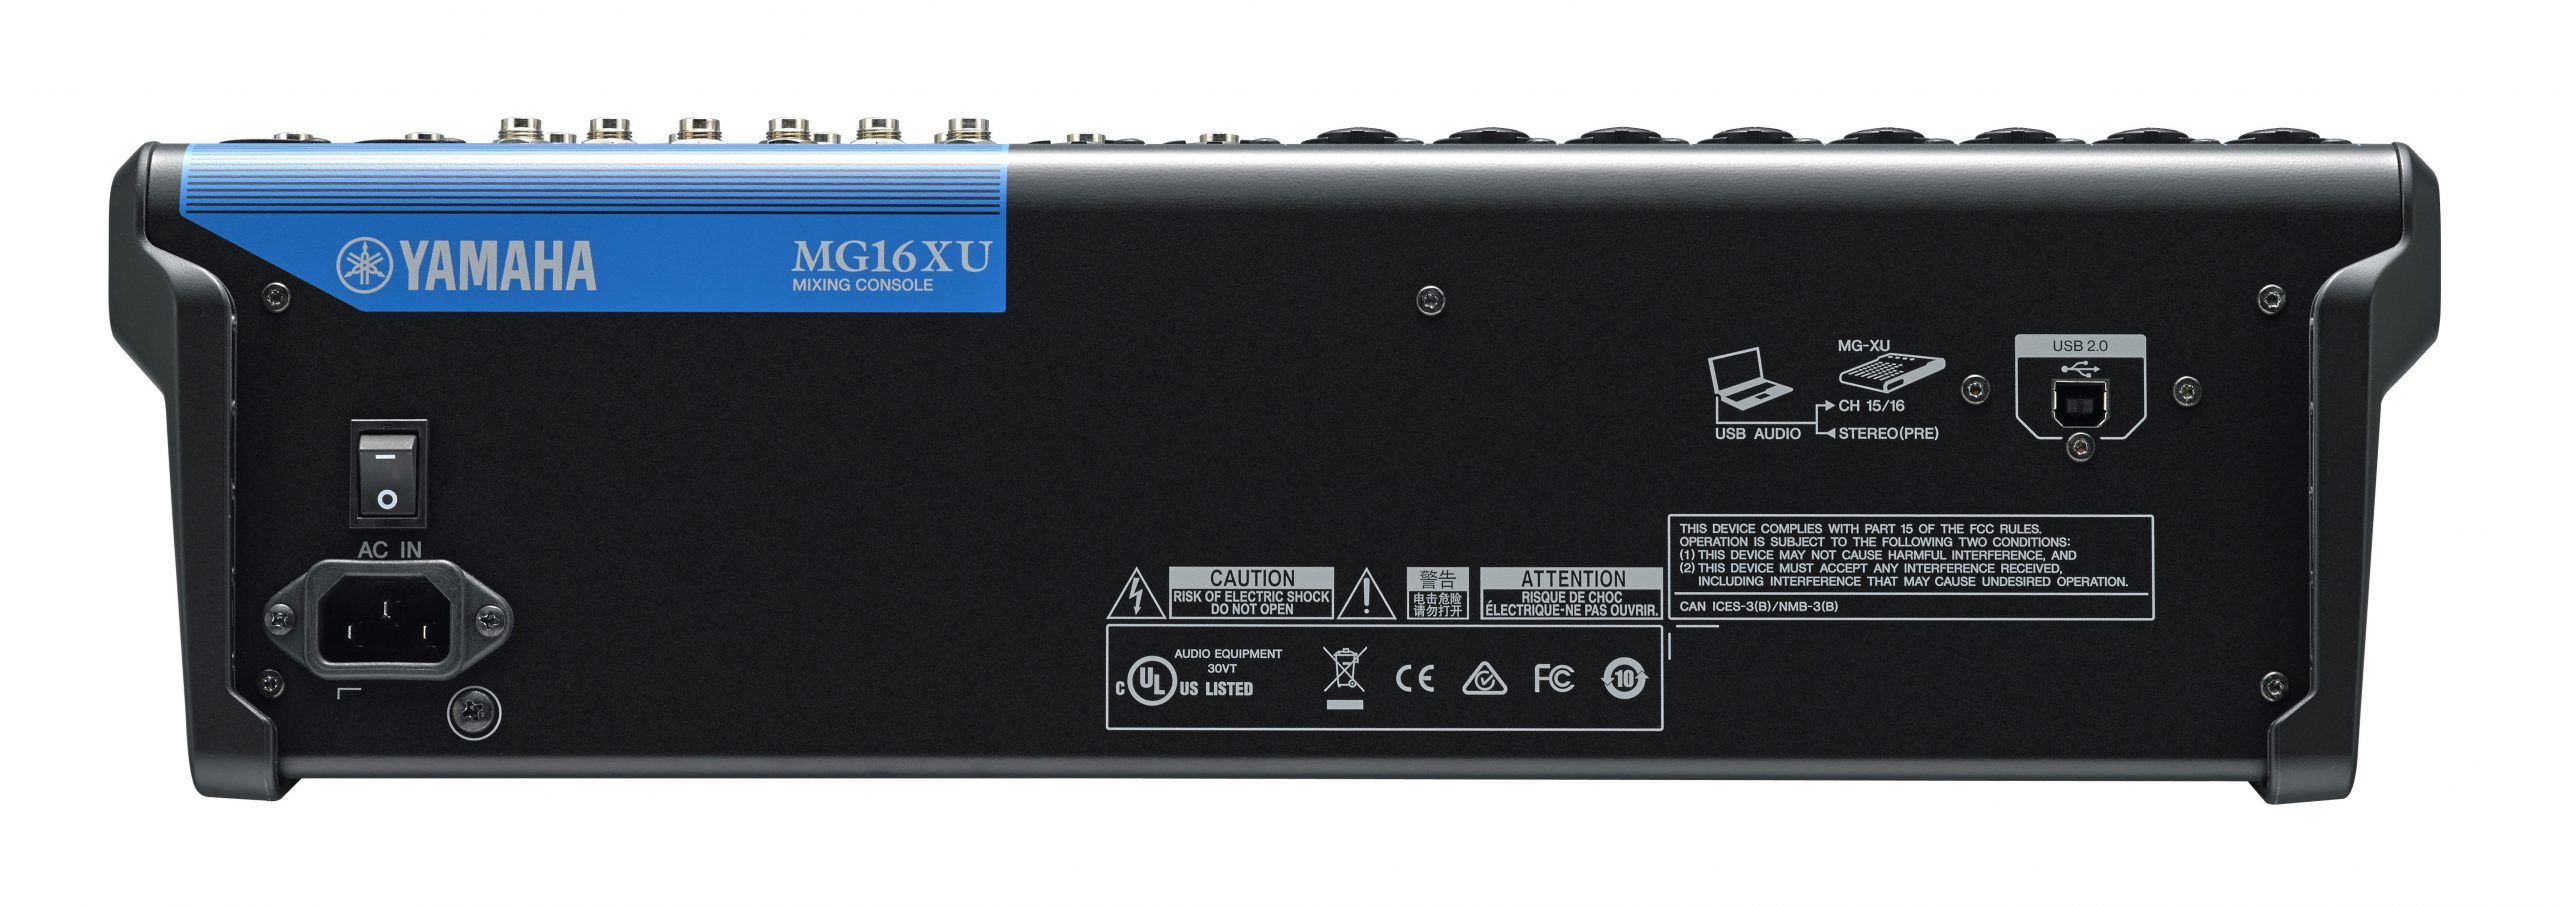 NEW Yamaha MG16XU 16-Channel Mixer w/ SPX Effects & USB - MG16XU 2 scaled 8489371b